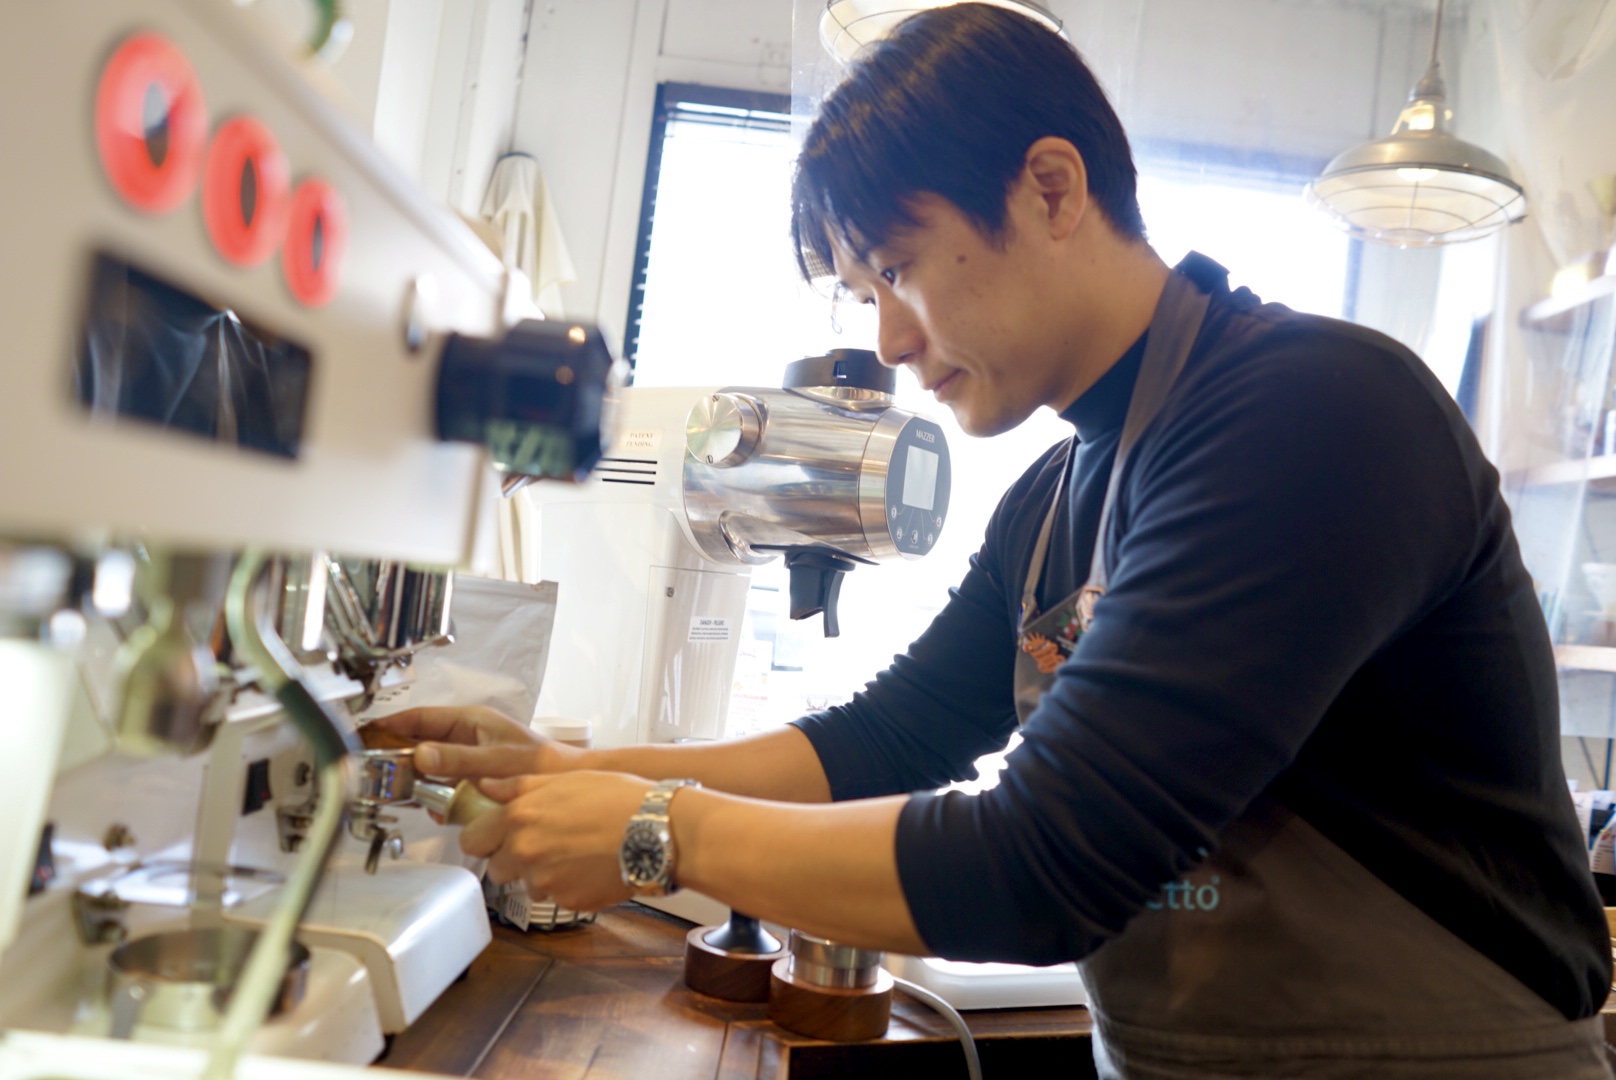 THE RELAY 8月マンスリーロースター【UNLIMITED COFFEE ROASTERS/BAR 東京都 荒川区/墨田区】無限に拡がるコーヒーの可能性を、東京スカイツリーの麓から。